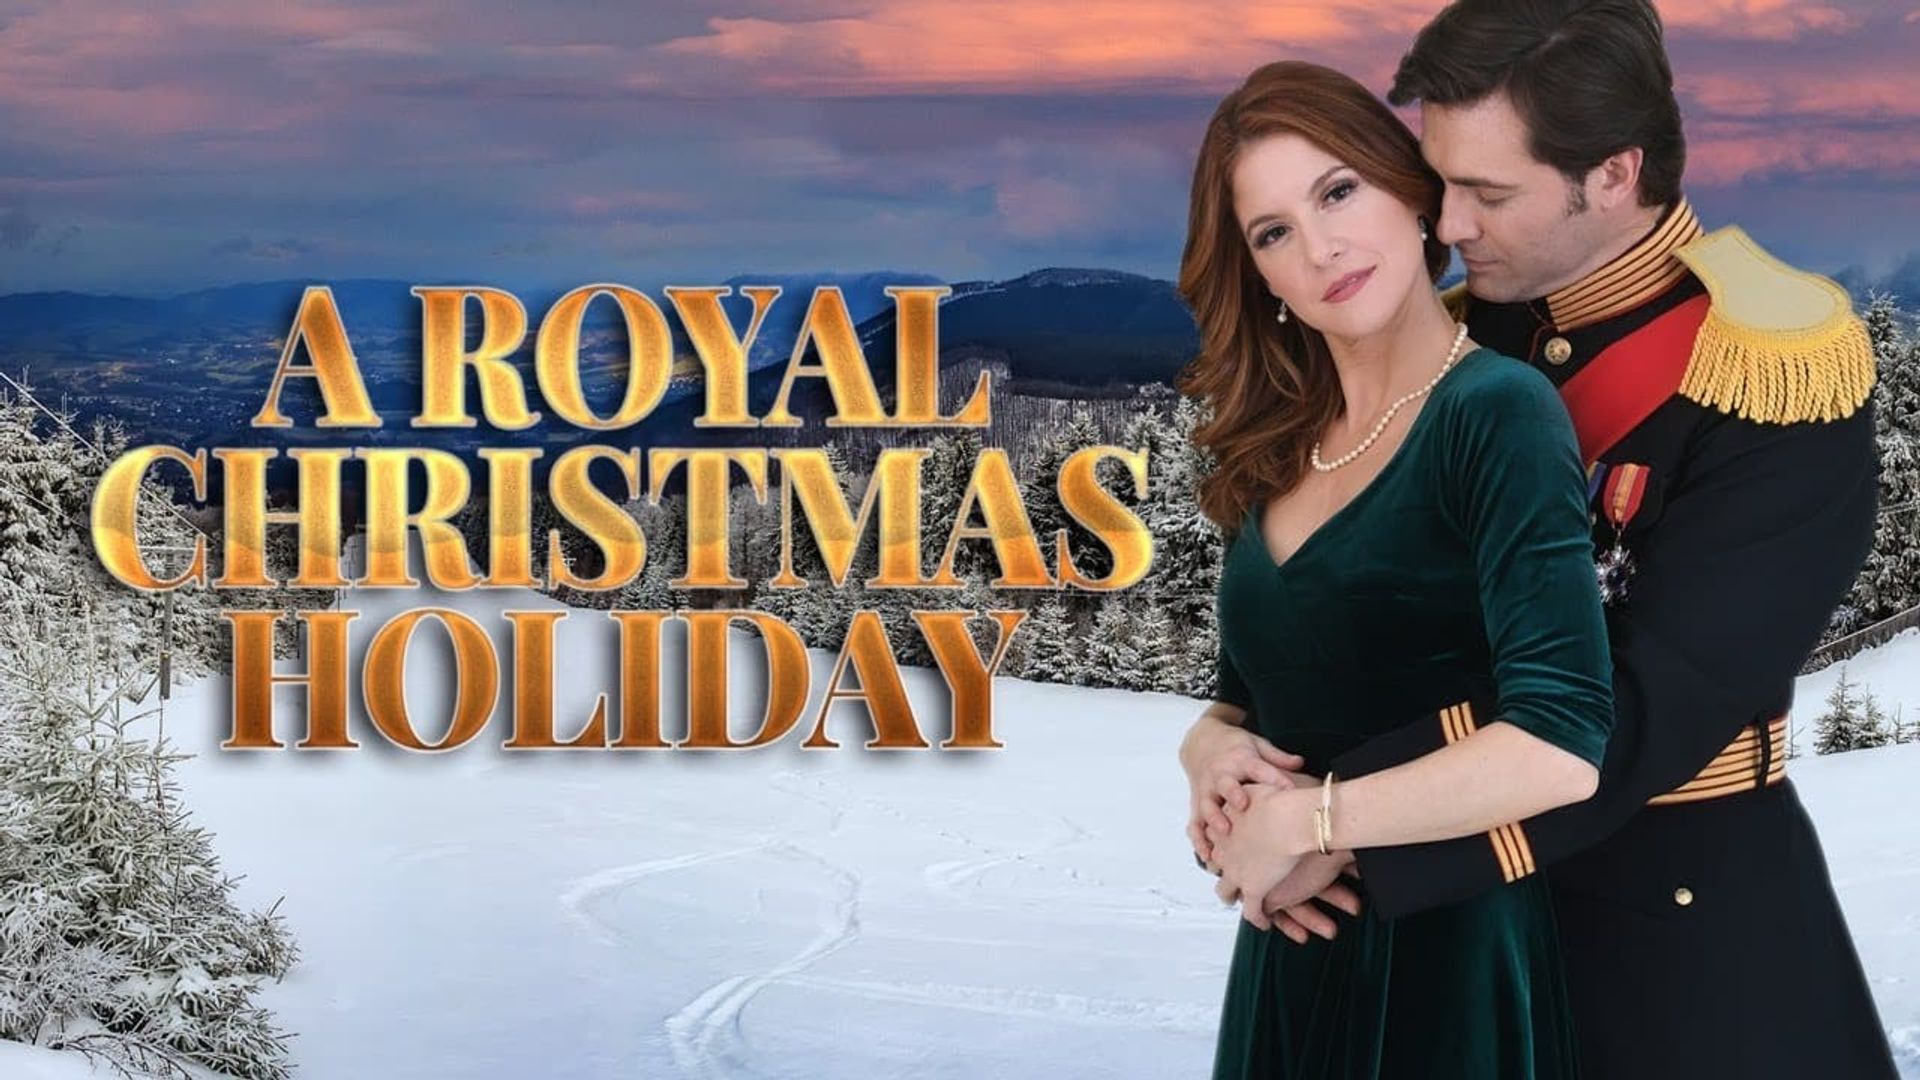 A Royal Christmas Holiday background